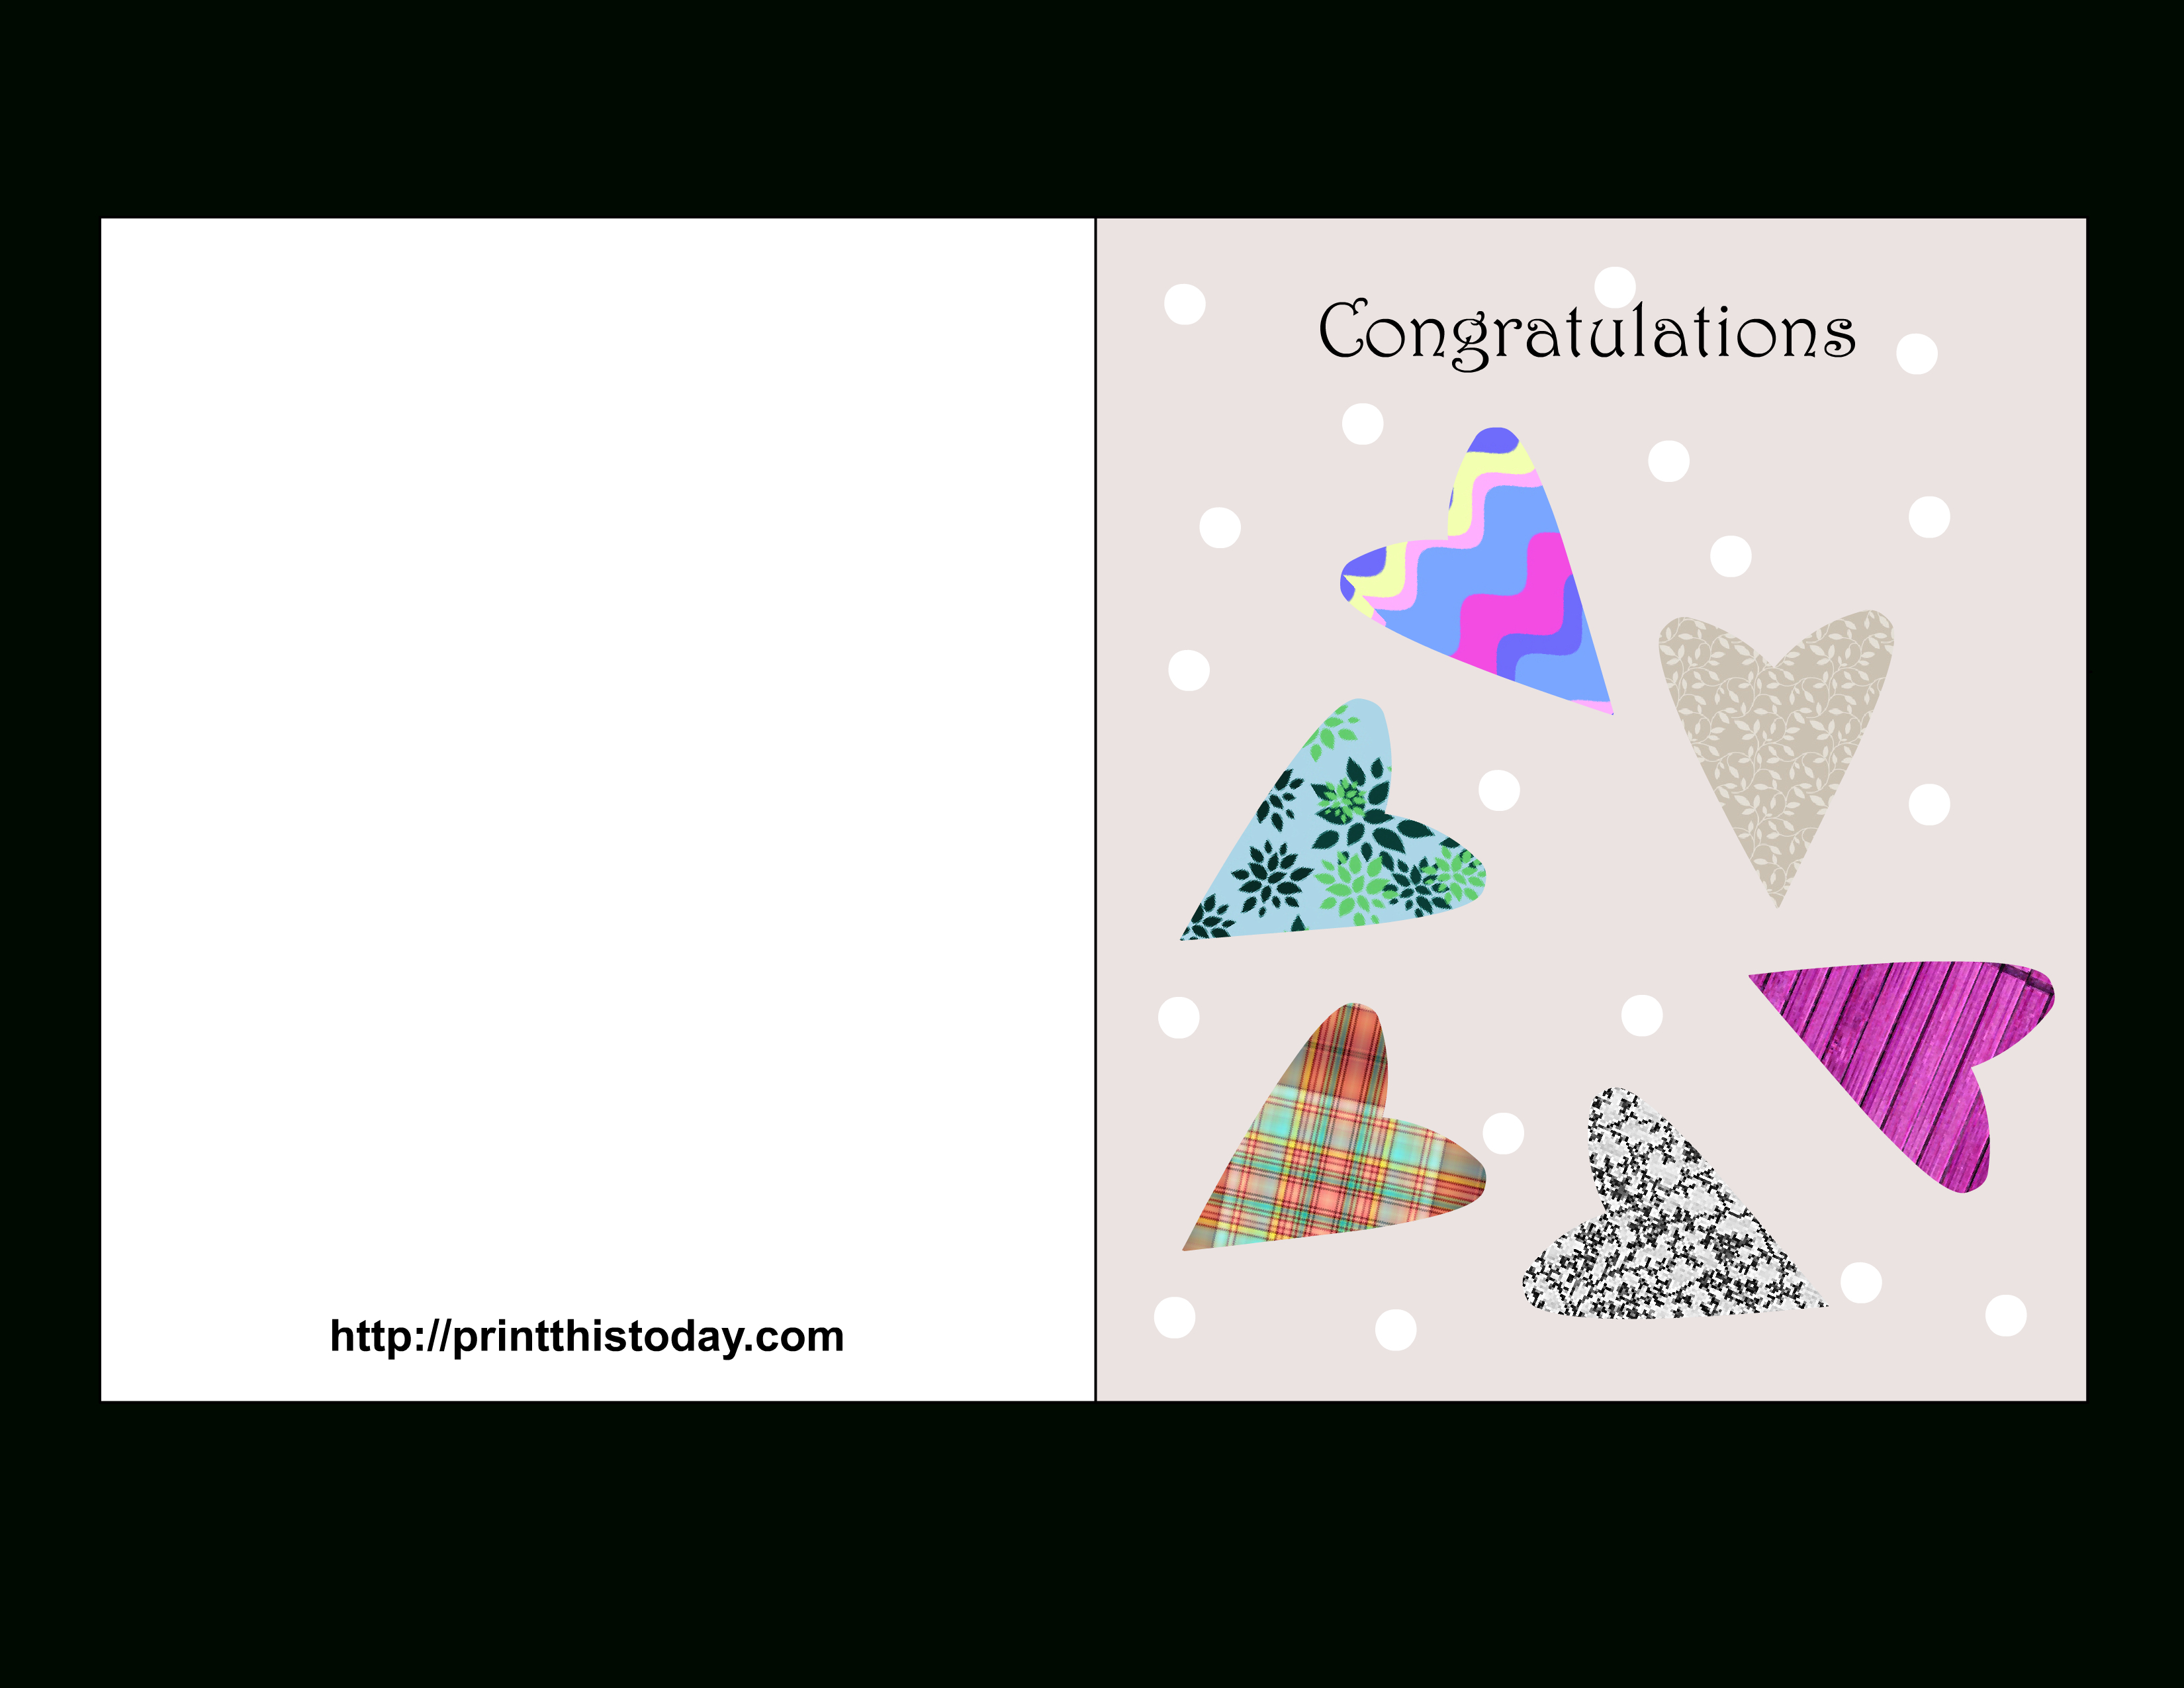 Free Printable Wedding Congratulations Cards - Free Printable Wedding Shower Greeting Cards